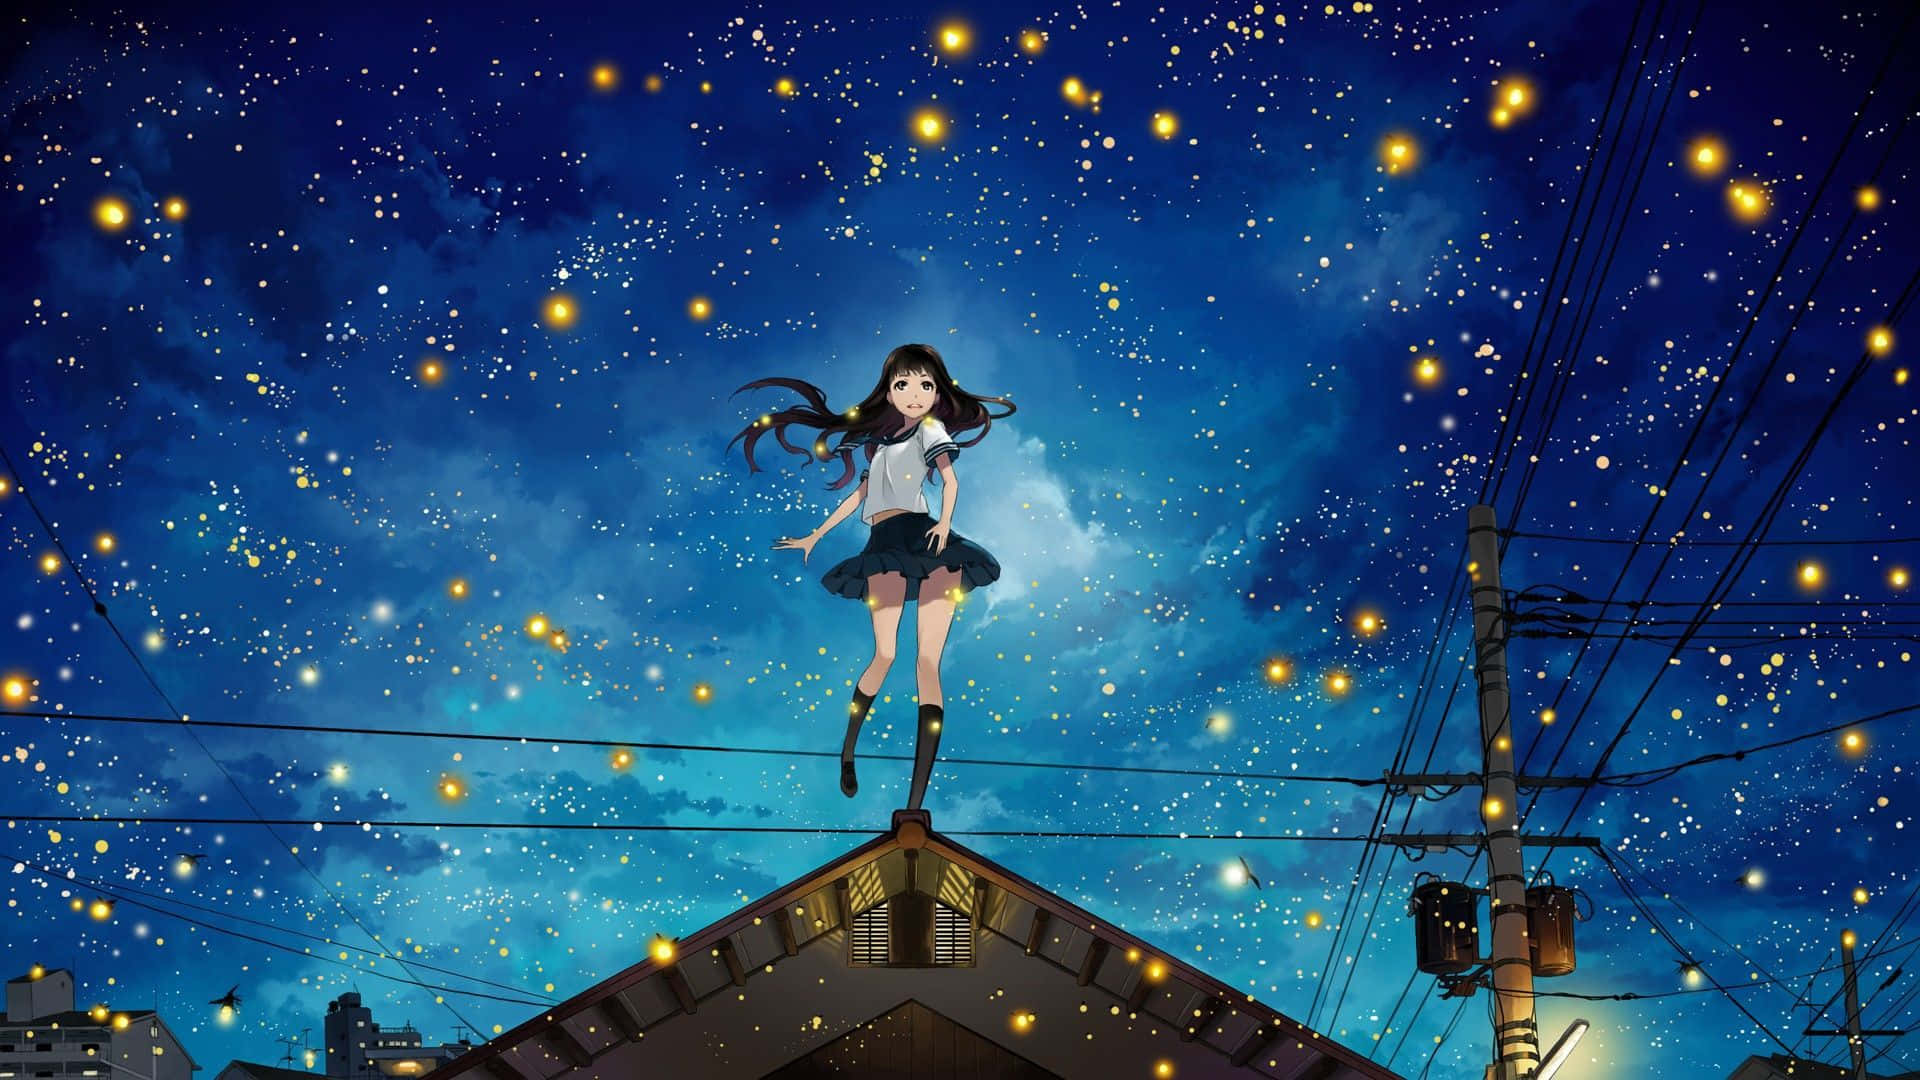 Night Anime Sky With Fireflies Wallpaper